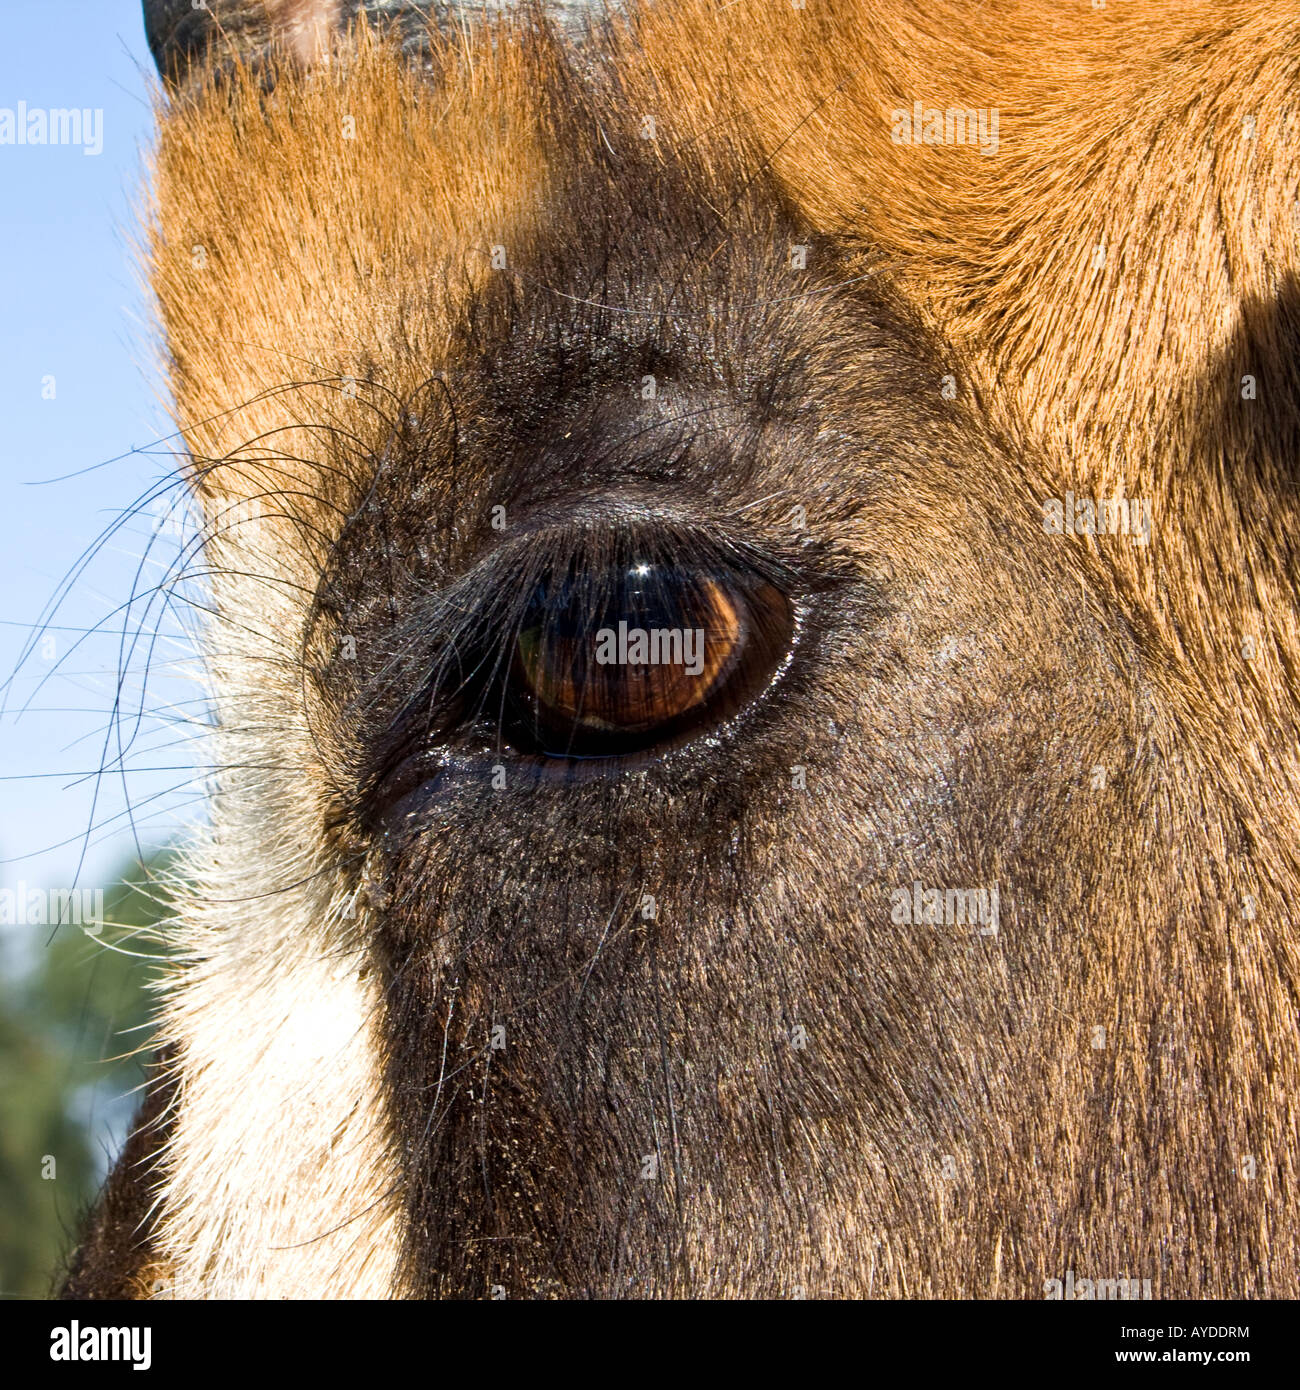 Sable Antelope - Hippotragus niger Stock Photo